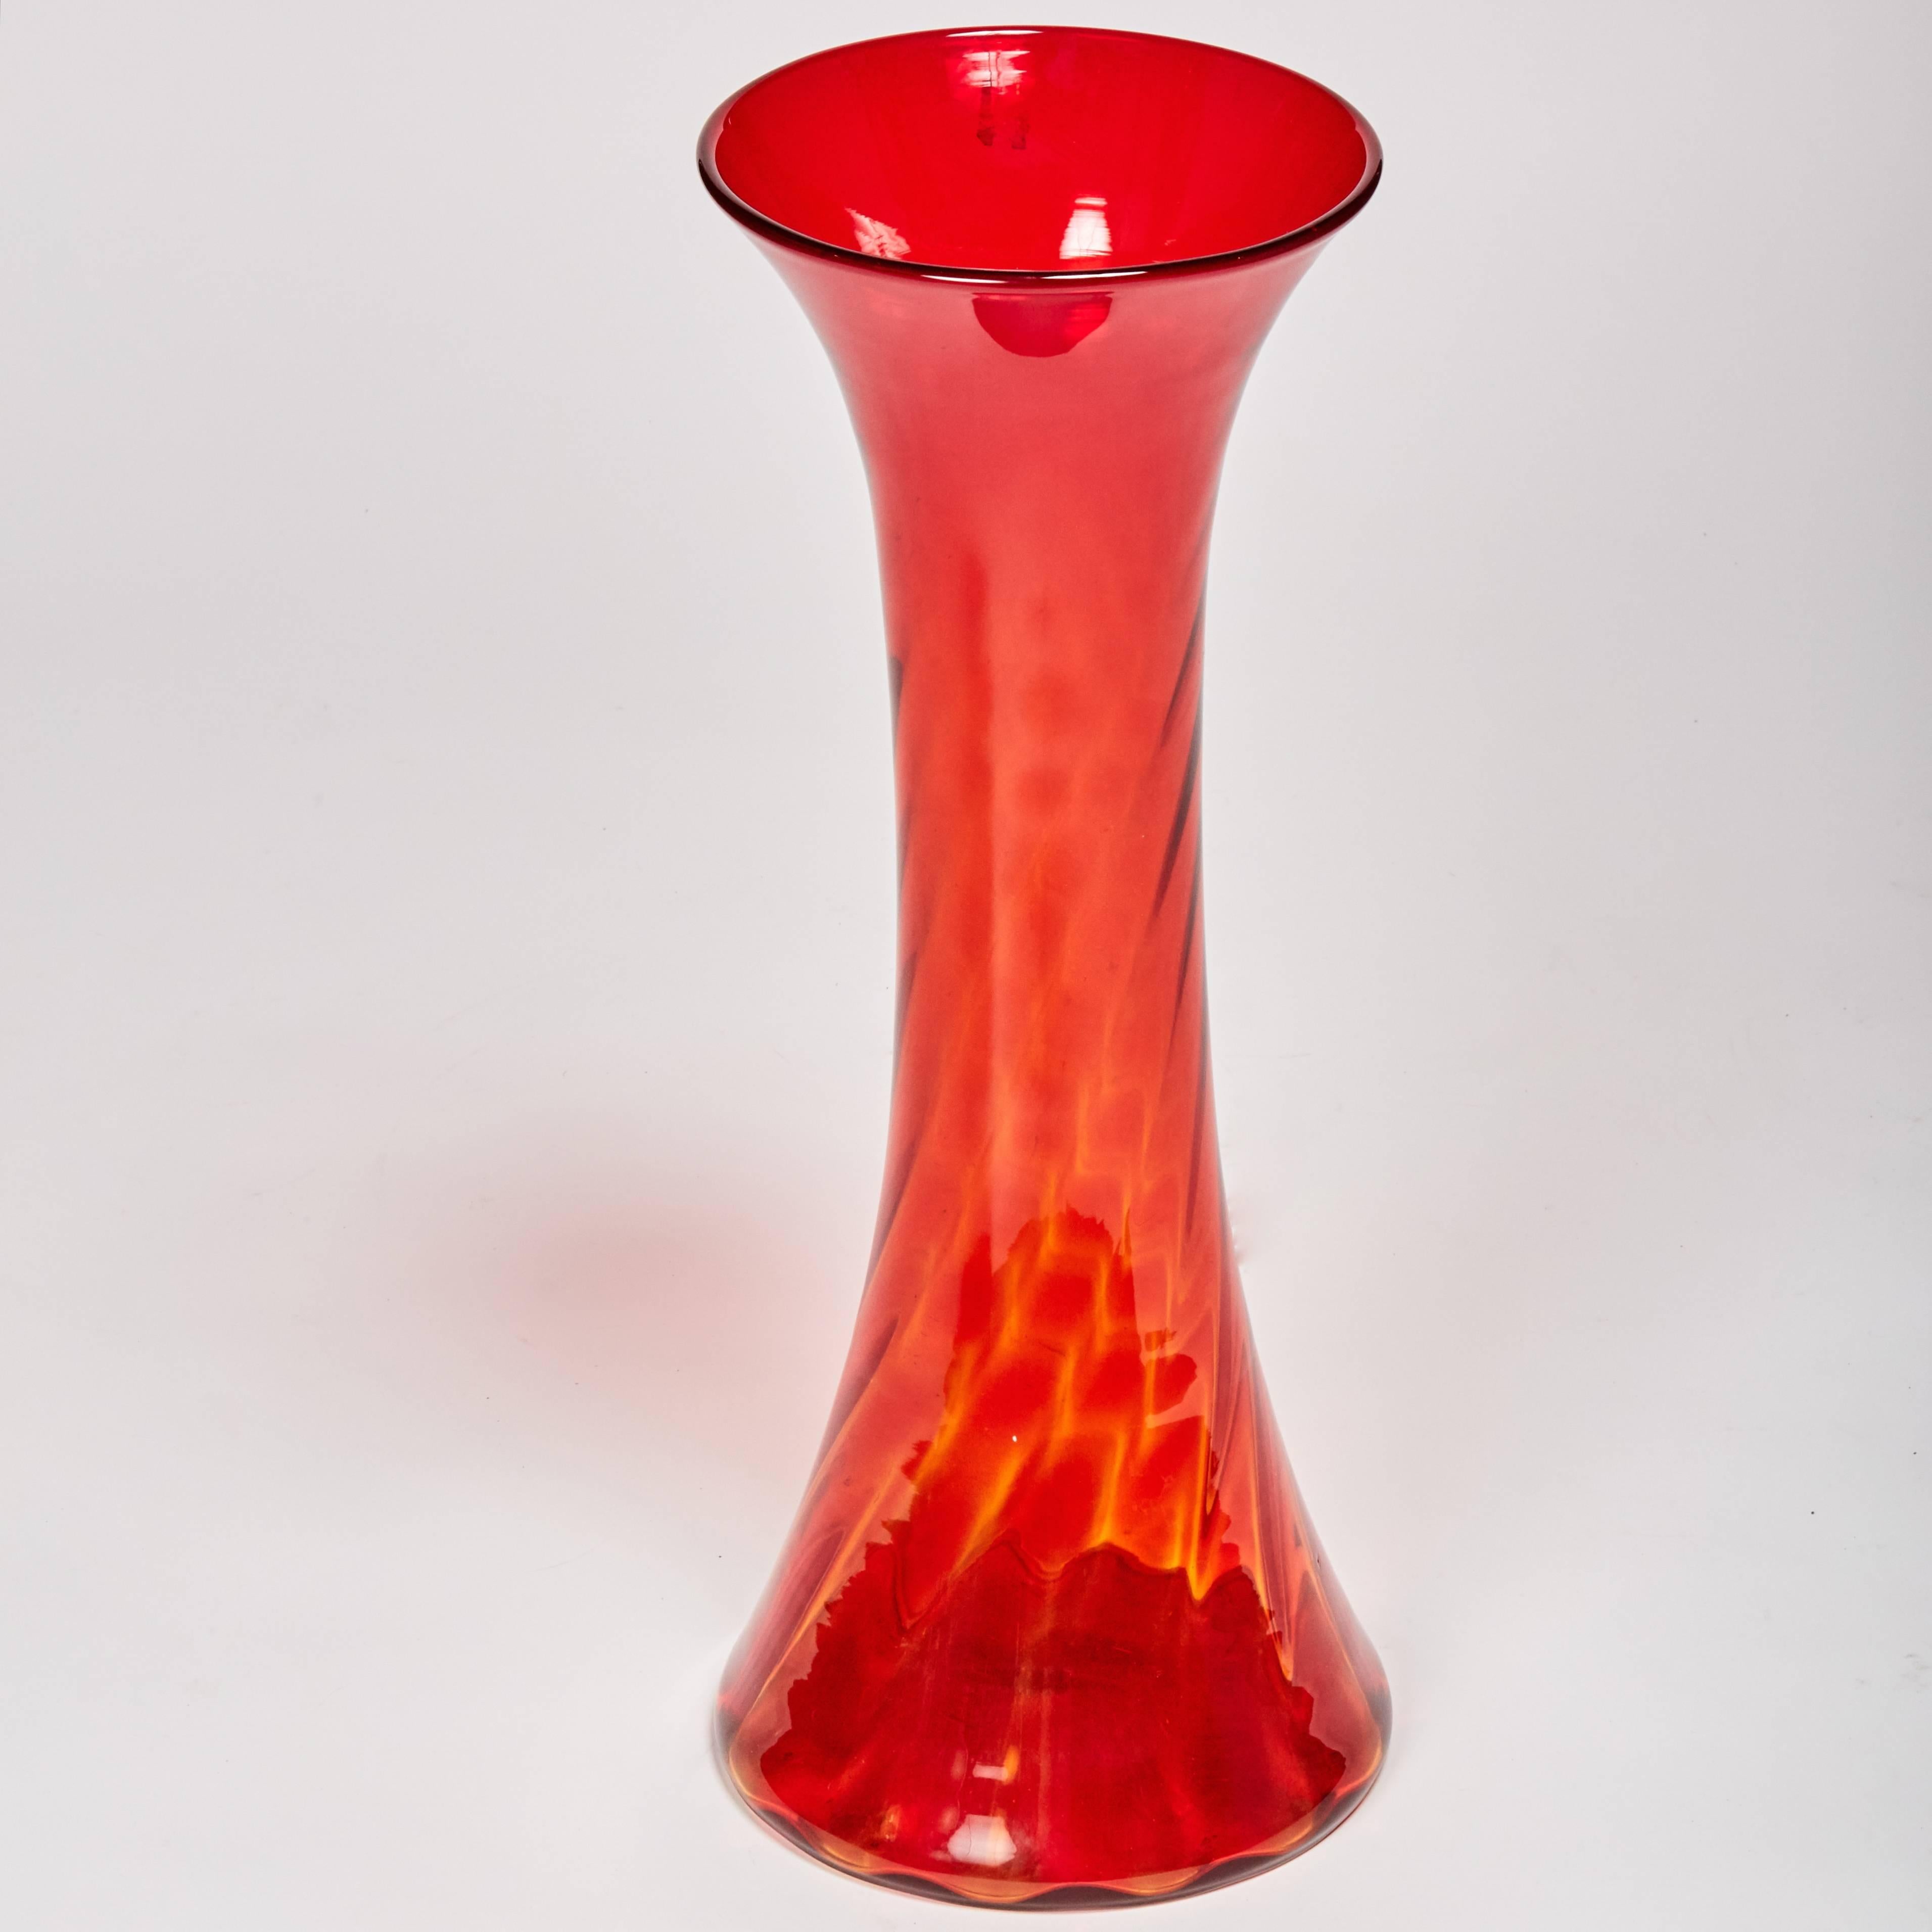 Tall, impressive, brilliant sunset orange, swirled glass vase by Blenko Glass.